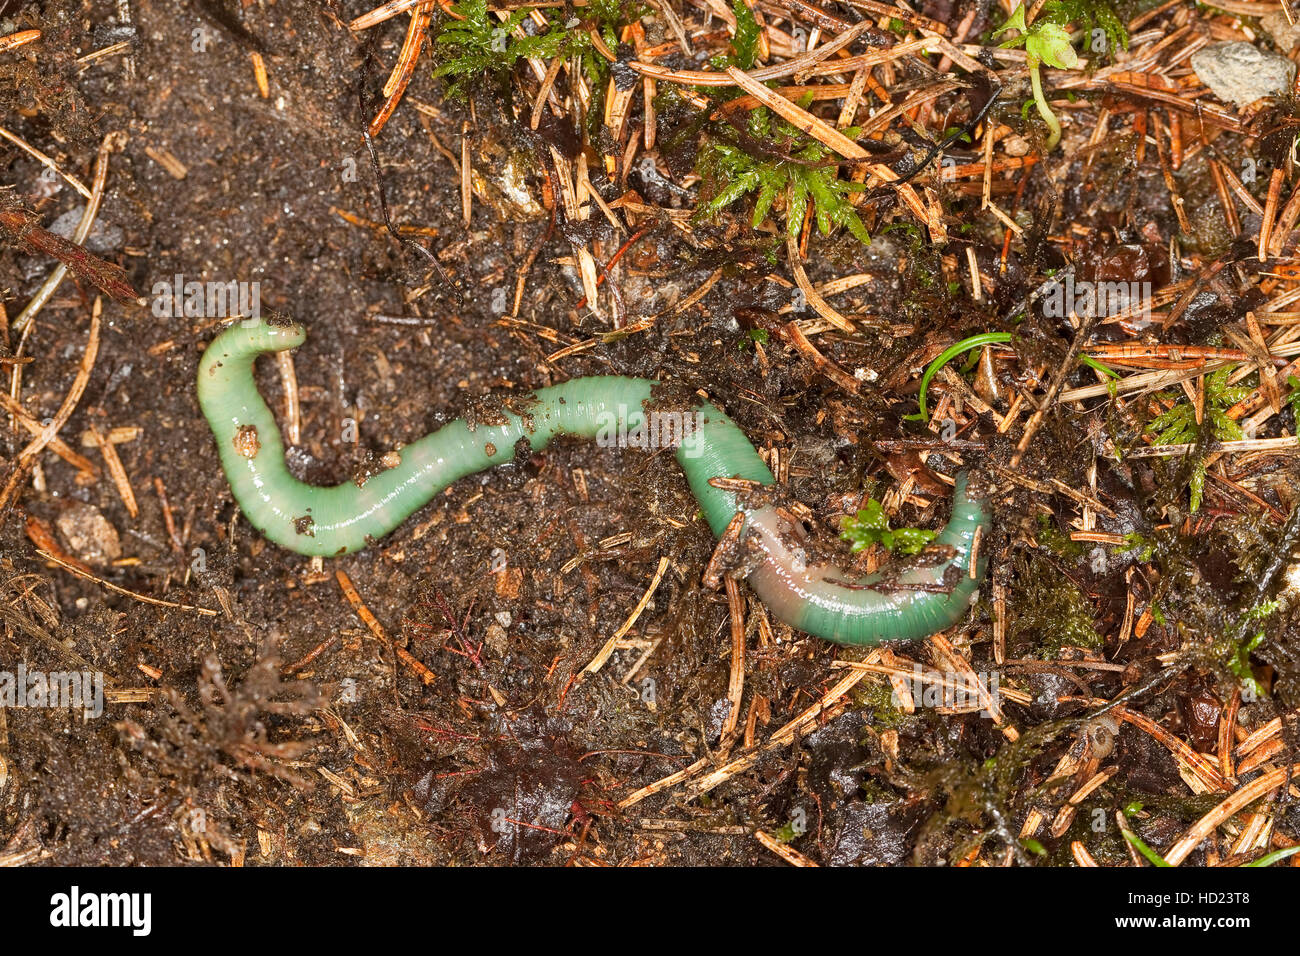 Grüner Regenwurm, Smaragdgrüner Regenwurm, Allolobophora smaragdina, Earthworm Stock Photo